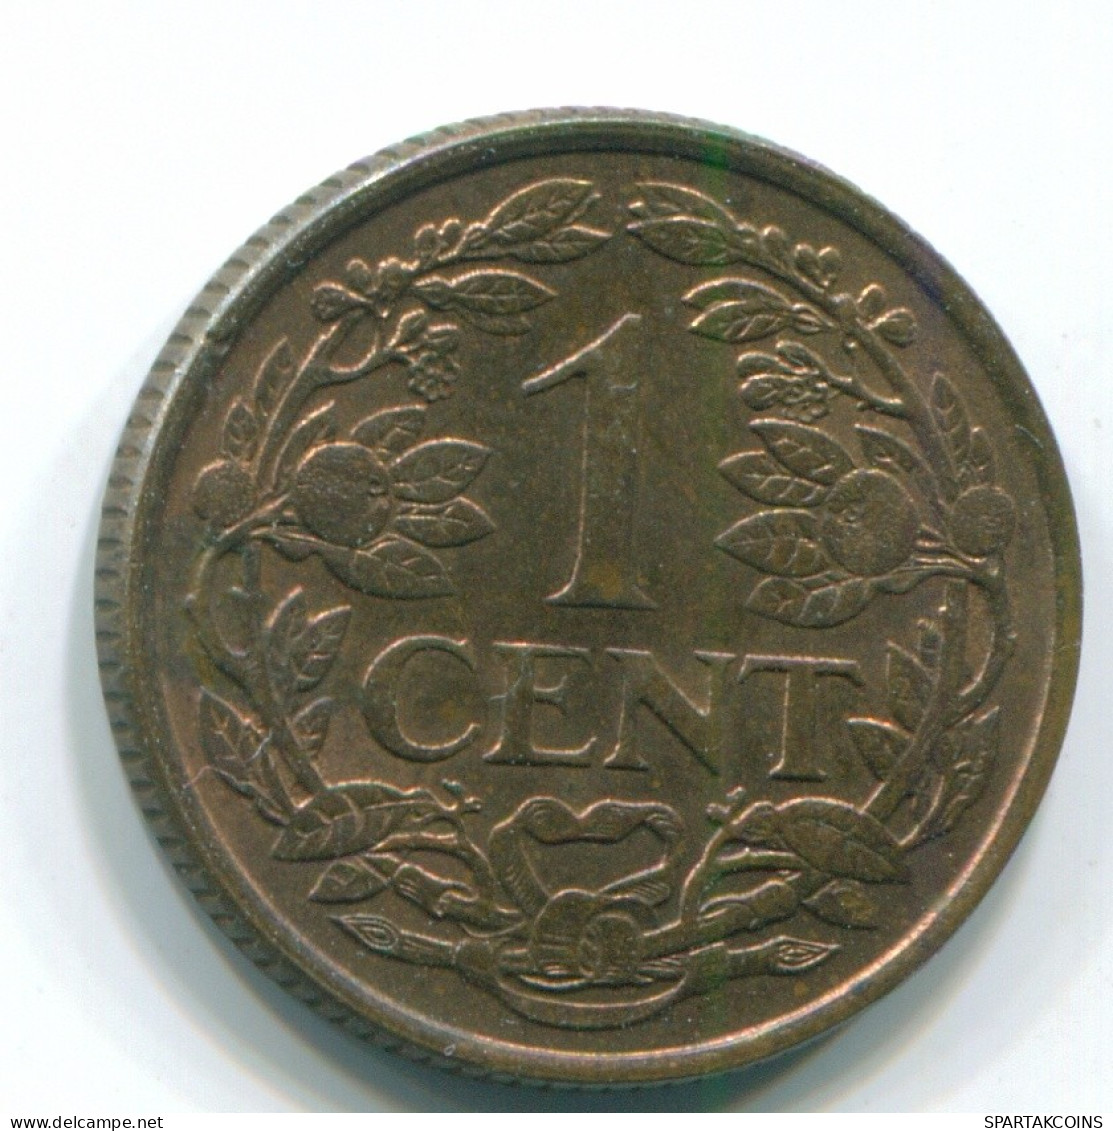 1 CENT 1967 ANTILLAS NEERLANDESAS Bronze Fish Colonial Moneda #S11140.E.A - Netherlands Antilles